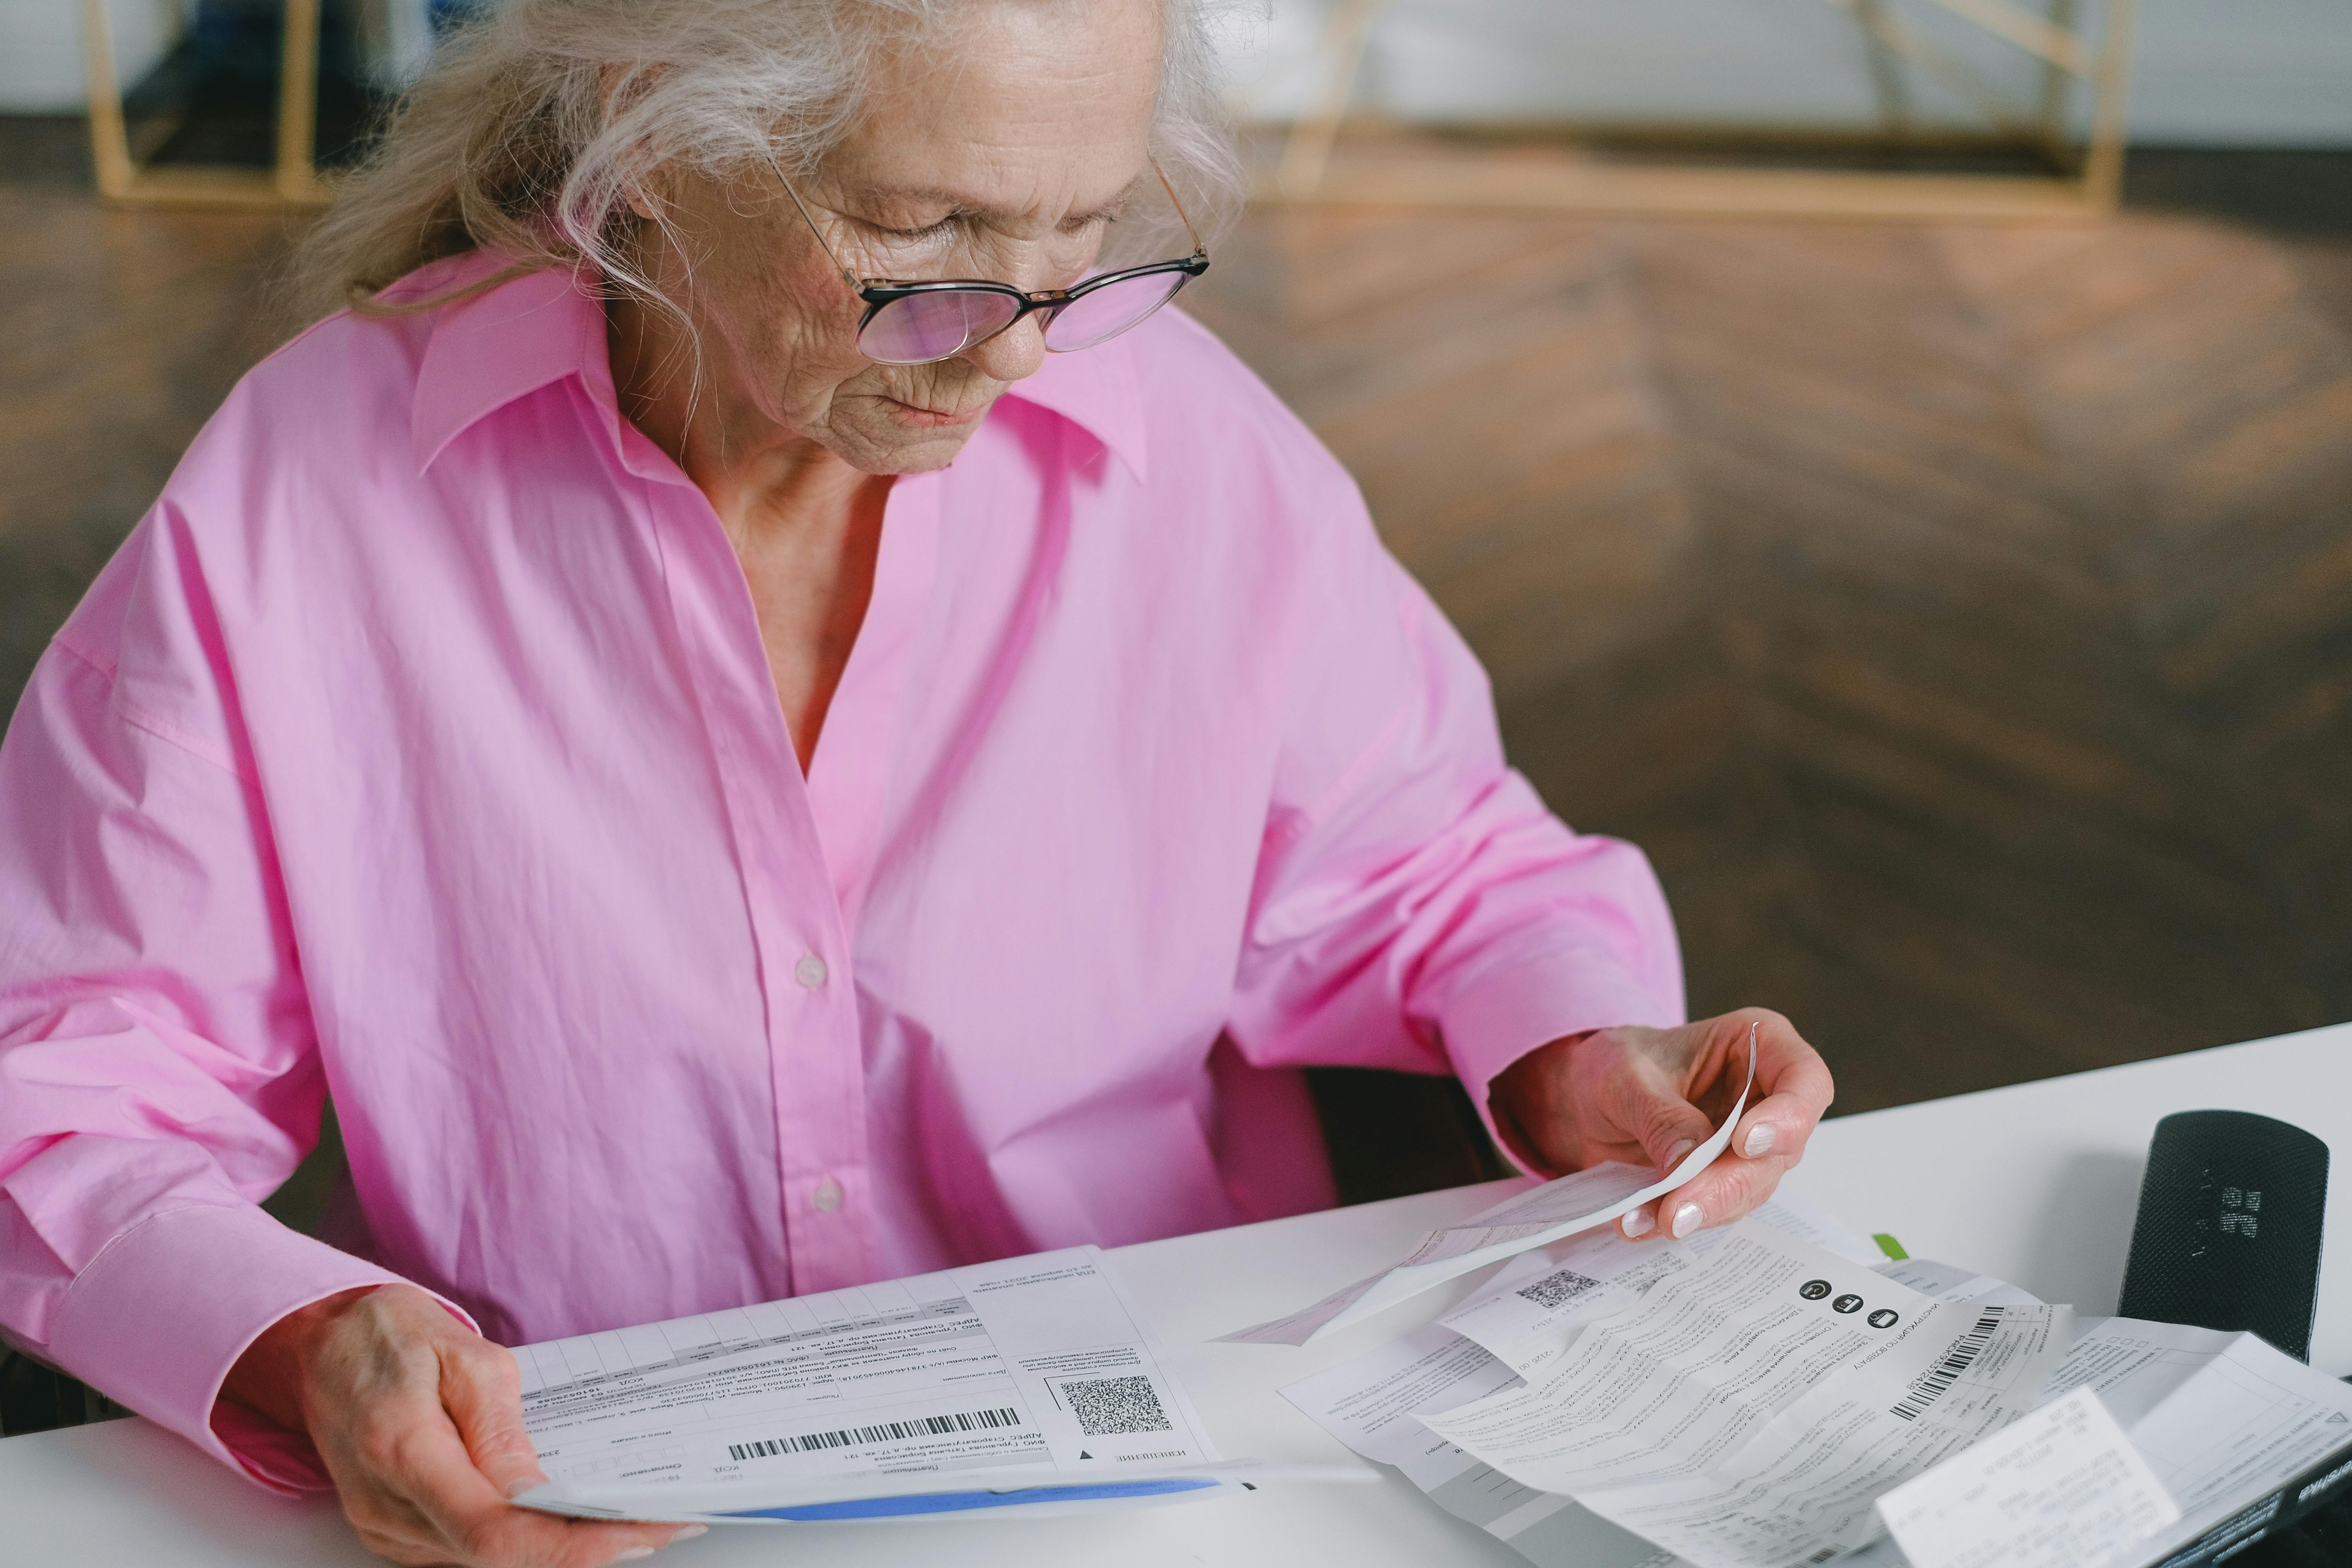 An elderly woman reading documents | Source: Pexels